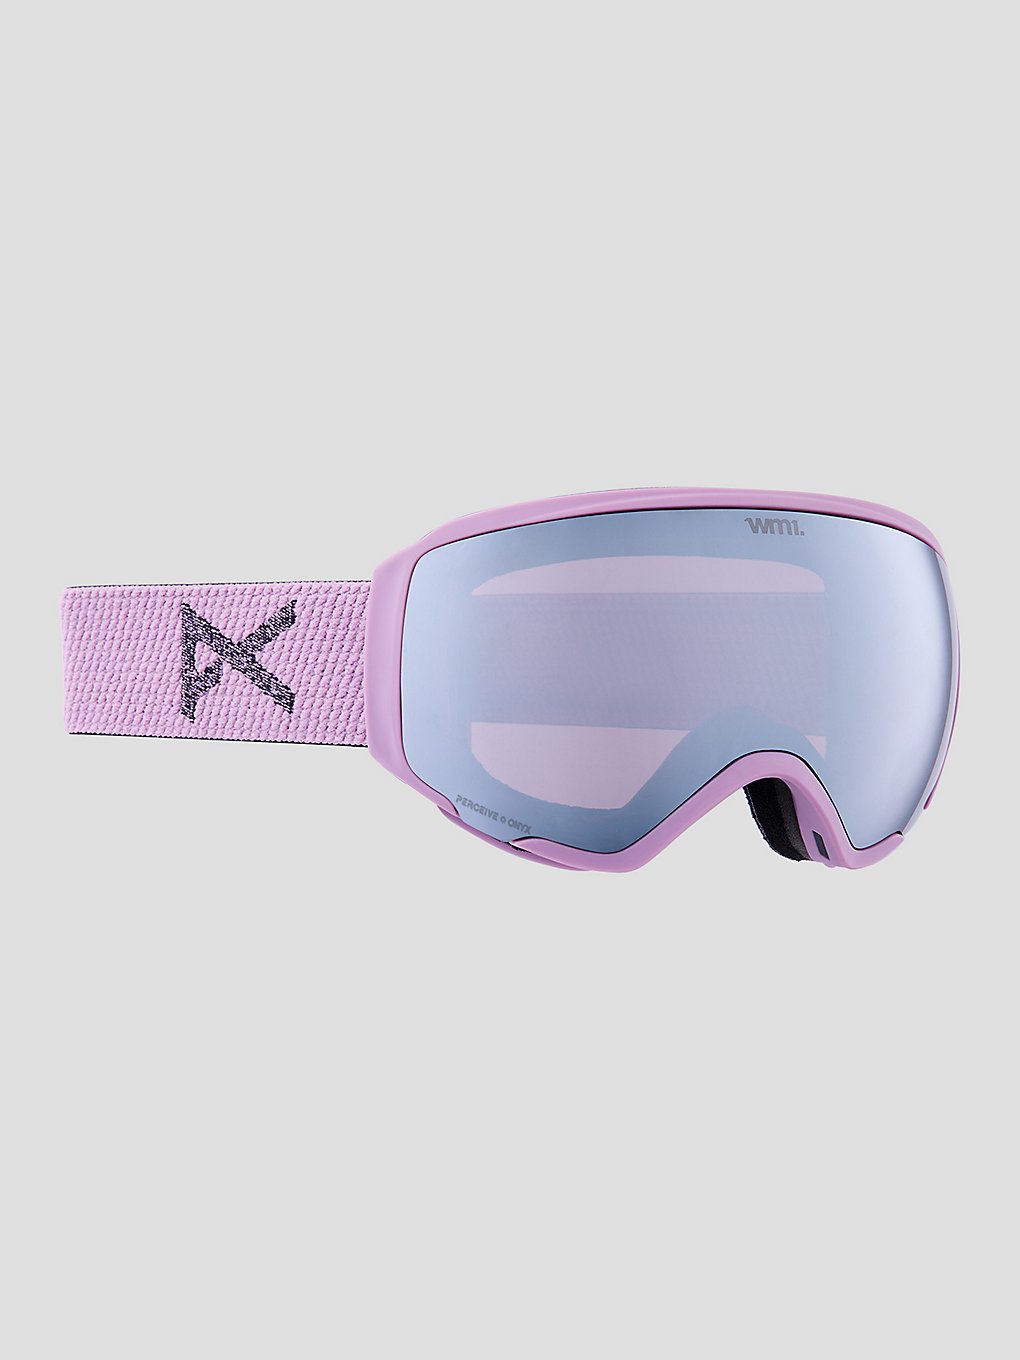 Anon WM1 MFI Purple (+Bonus Lens) Goggle perceive sun onyx kaufen